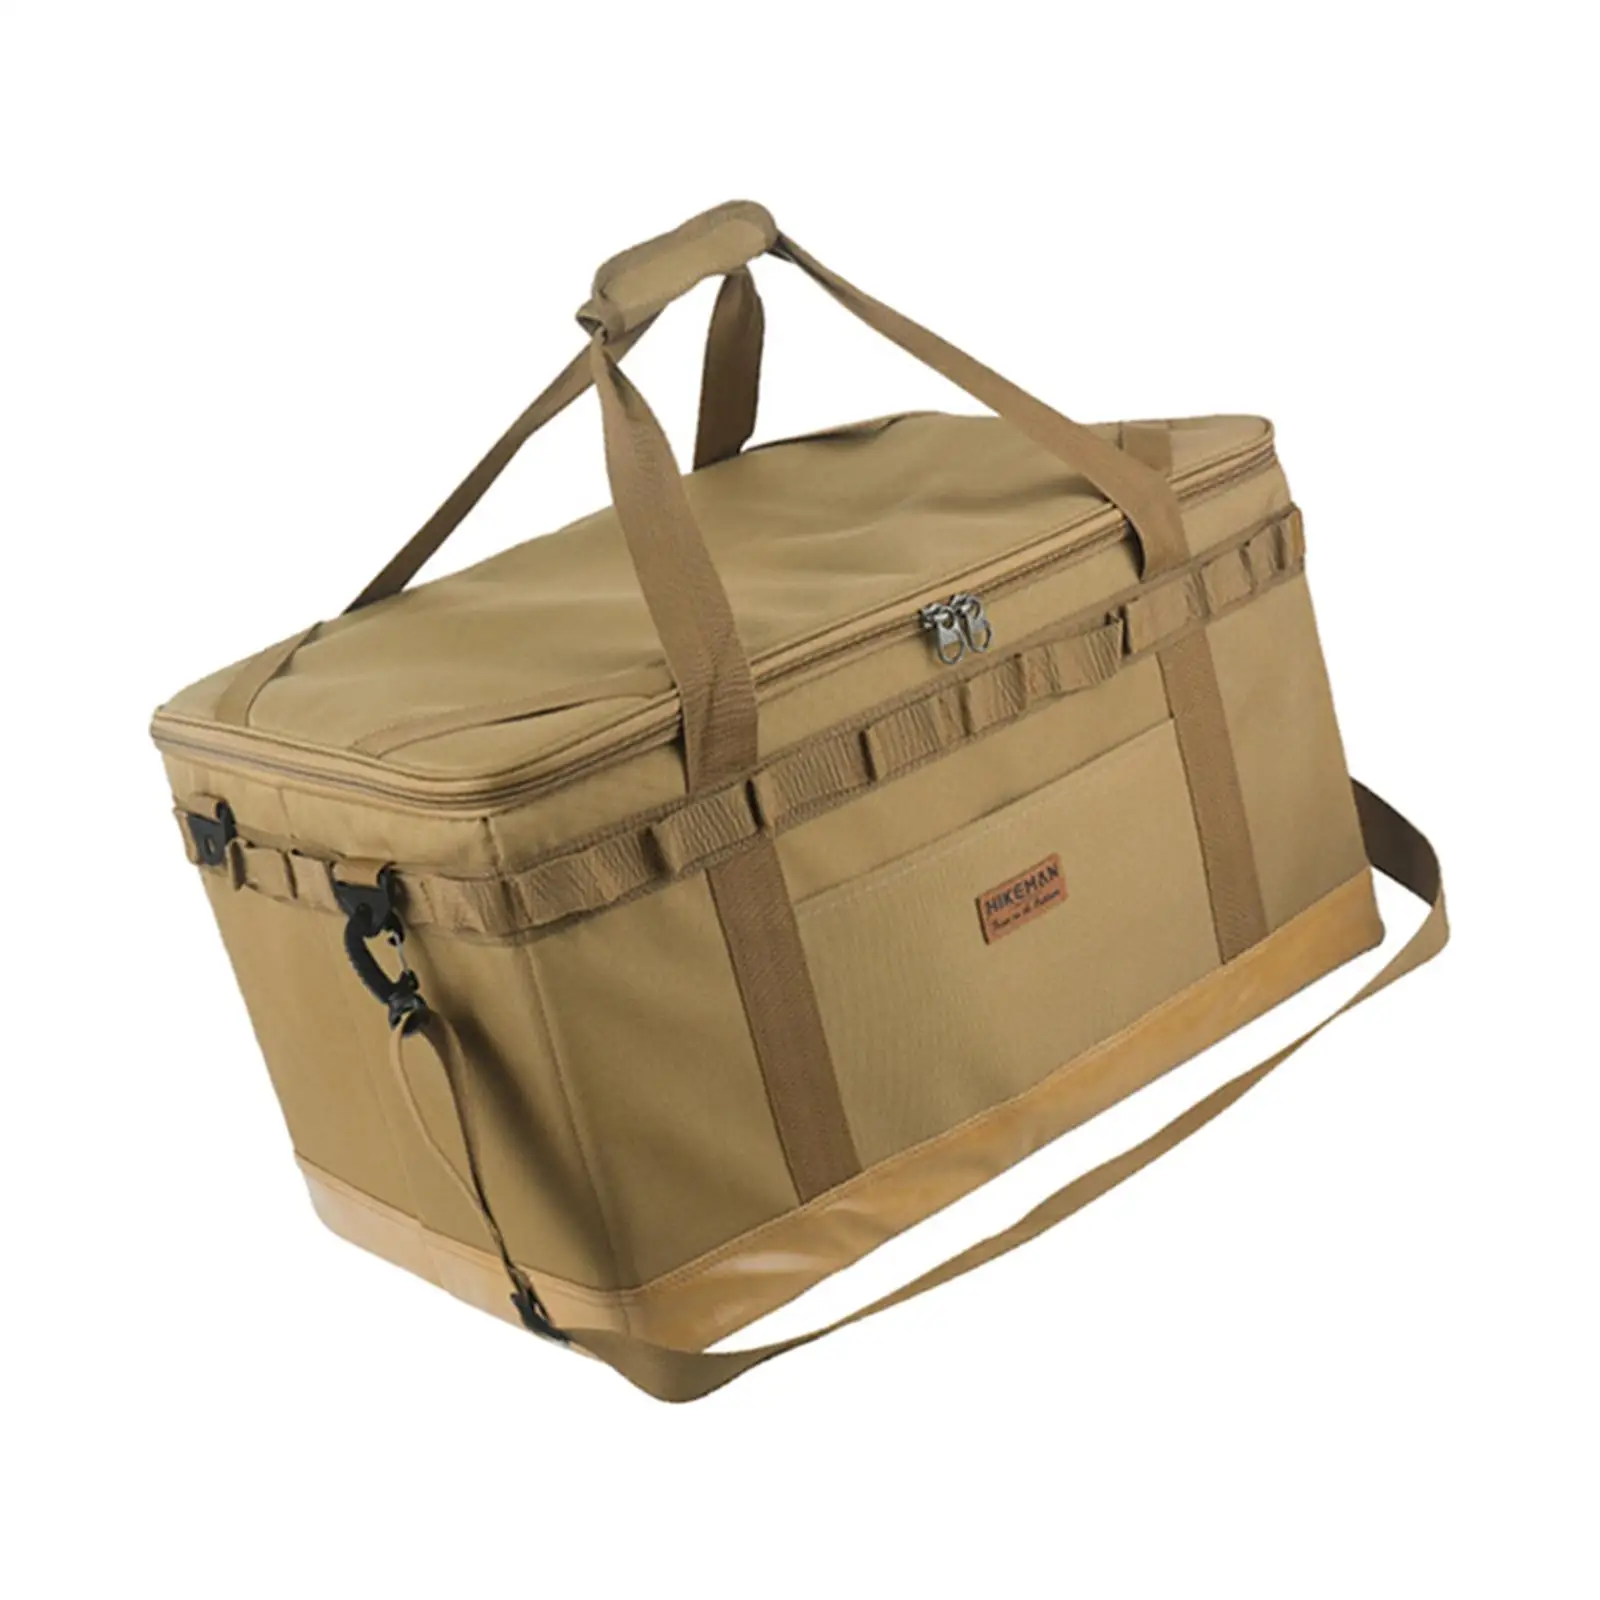 57L Large Capacity Outdoor Camping Gear Bag Duffel Bag Hard Storage Box